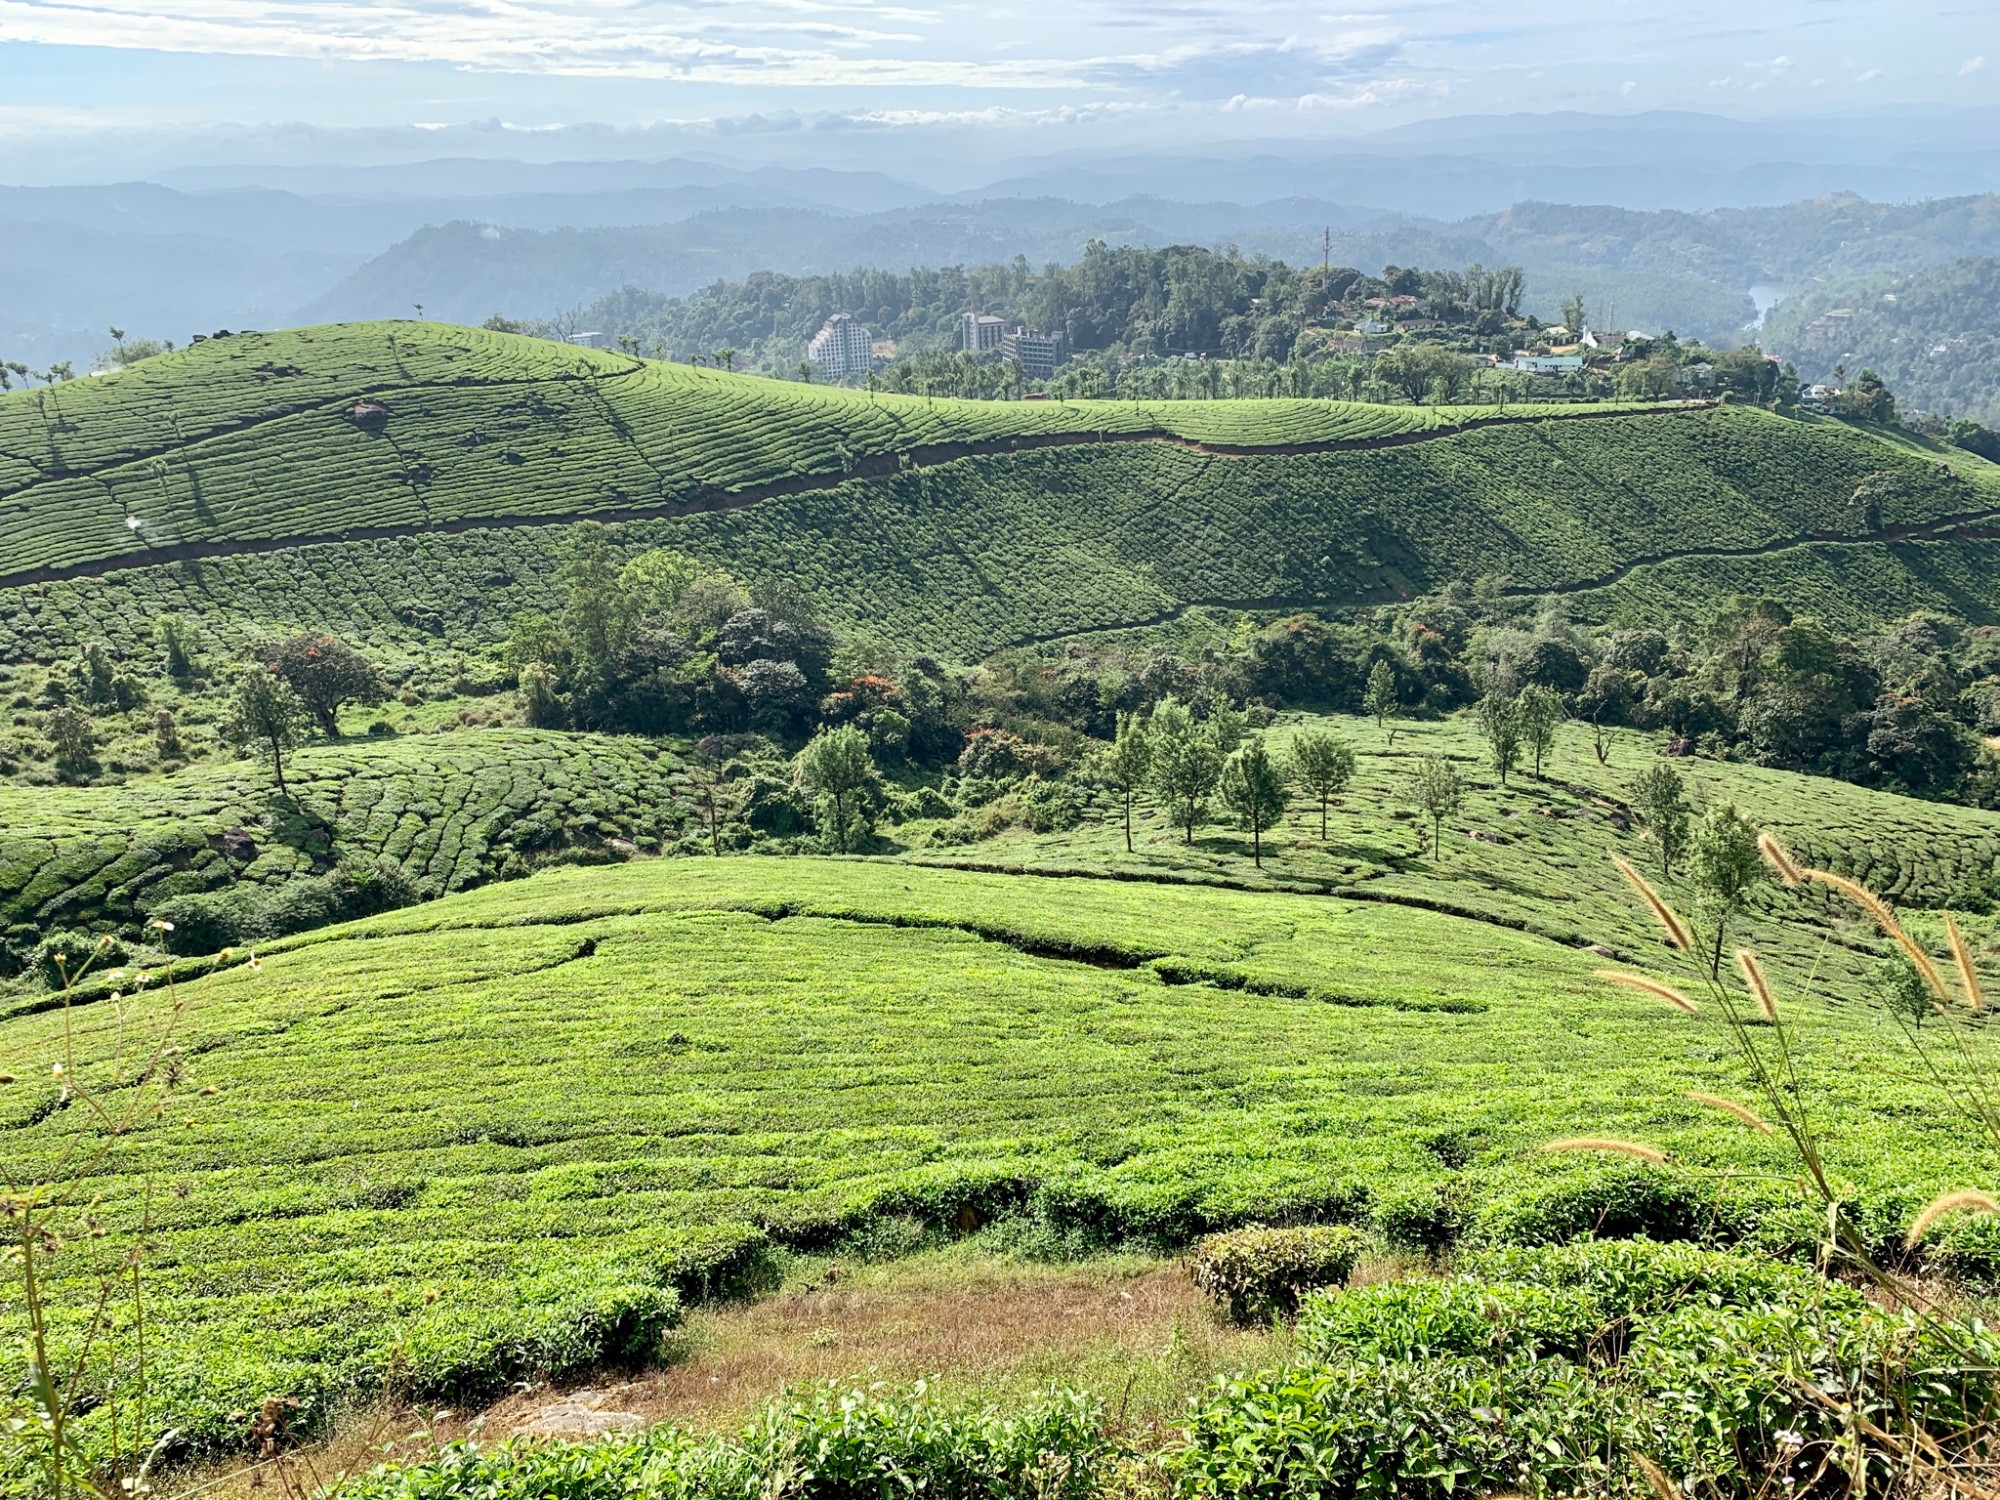 Tea plantation munnar